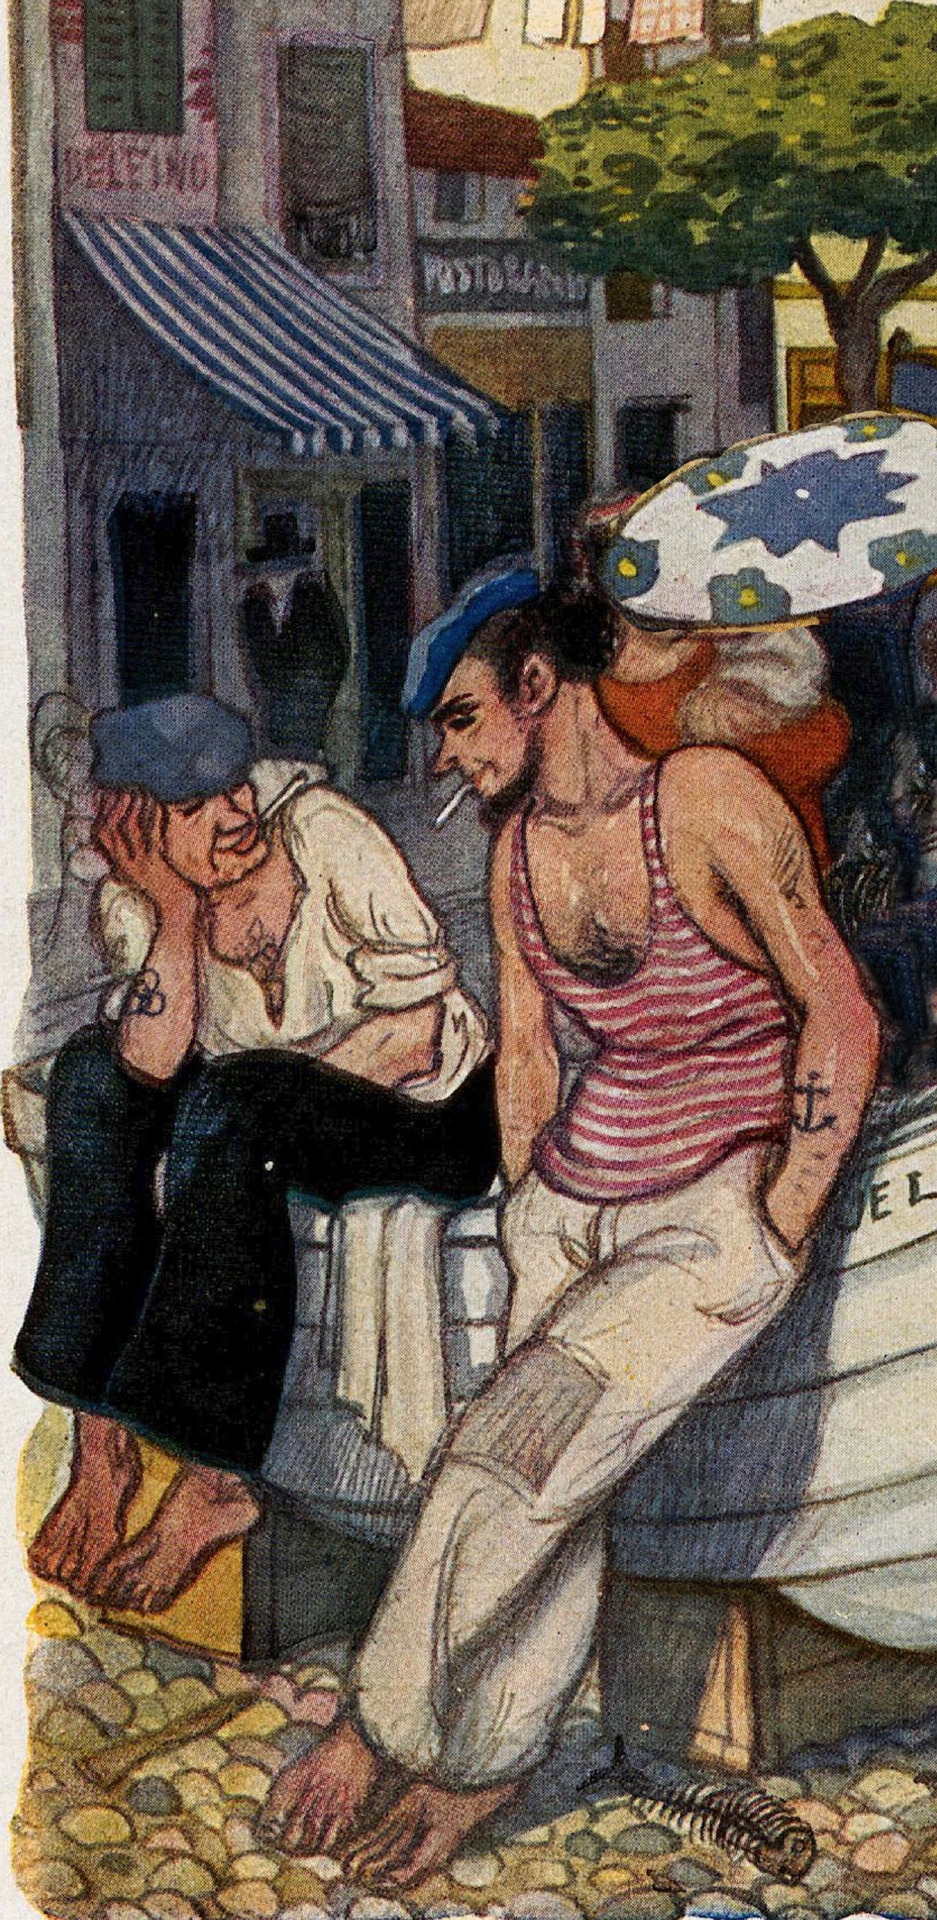 Lonesome Sailors
From Fliegende Blätter, 1932.